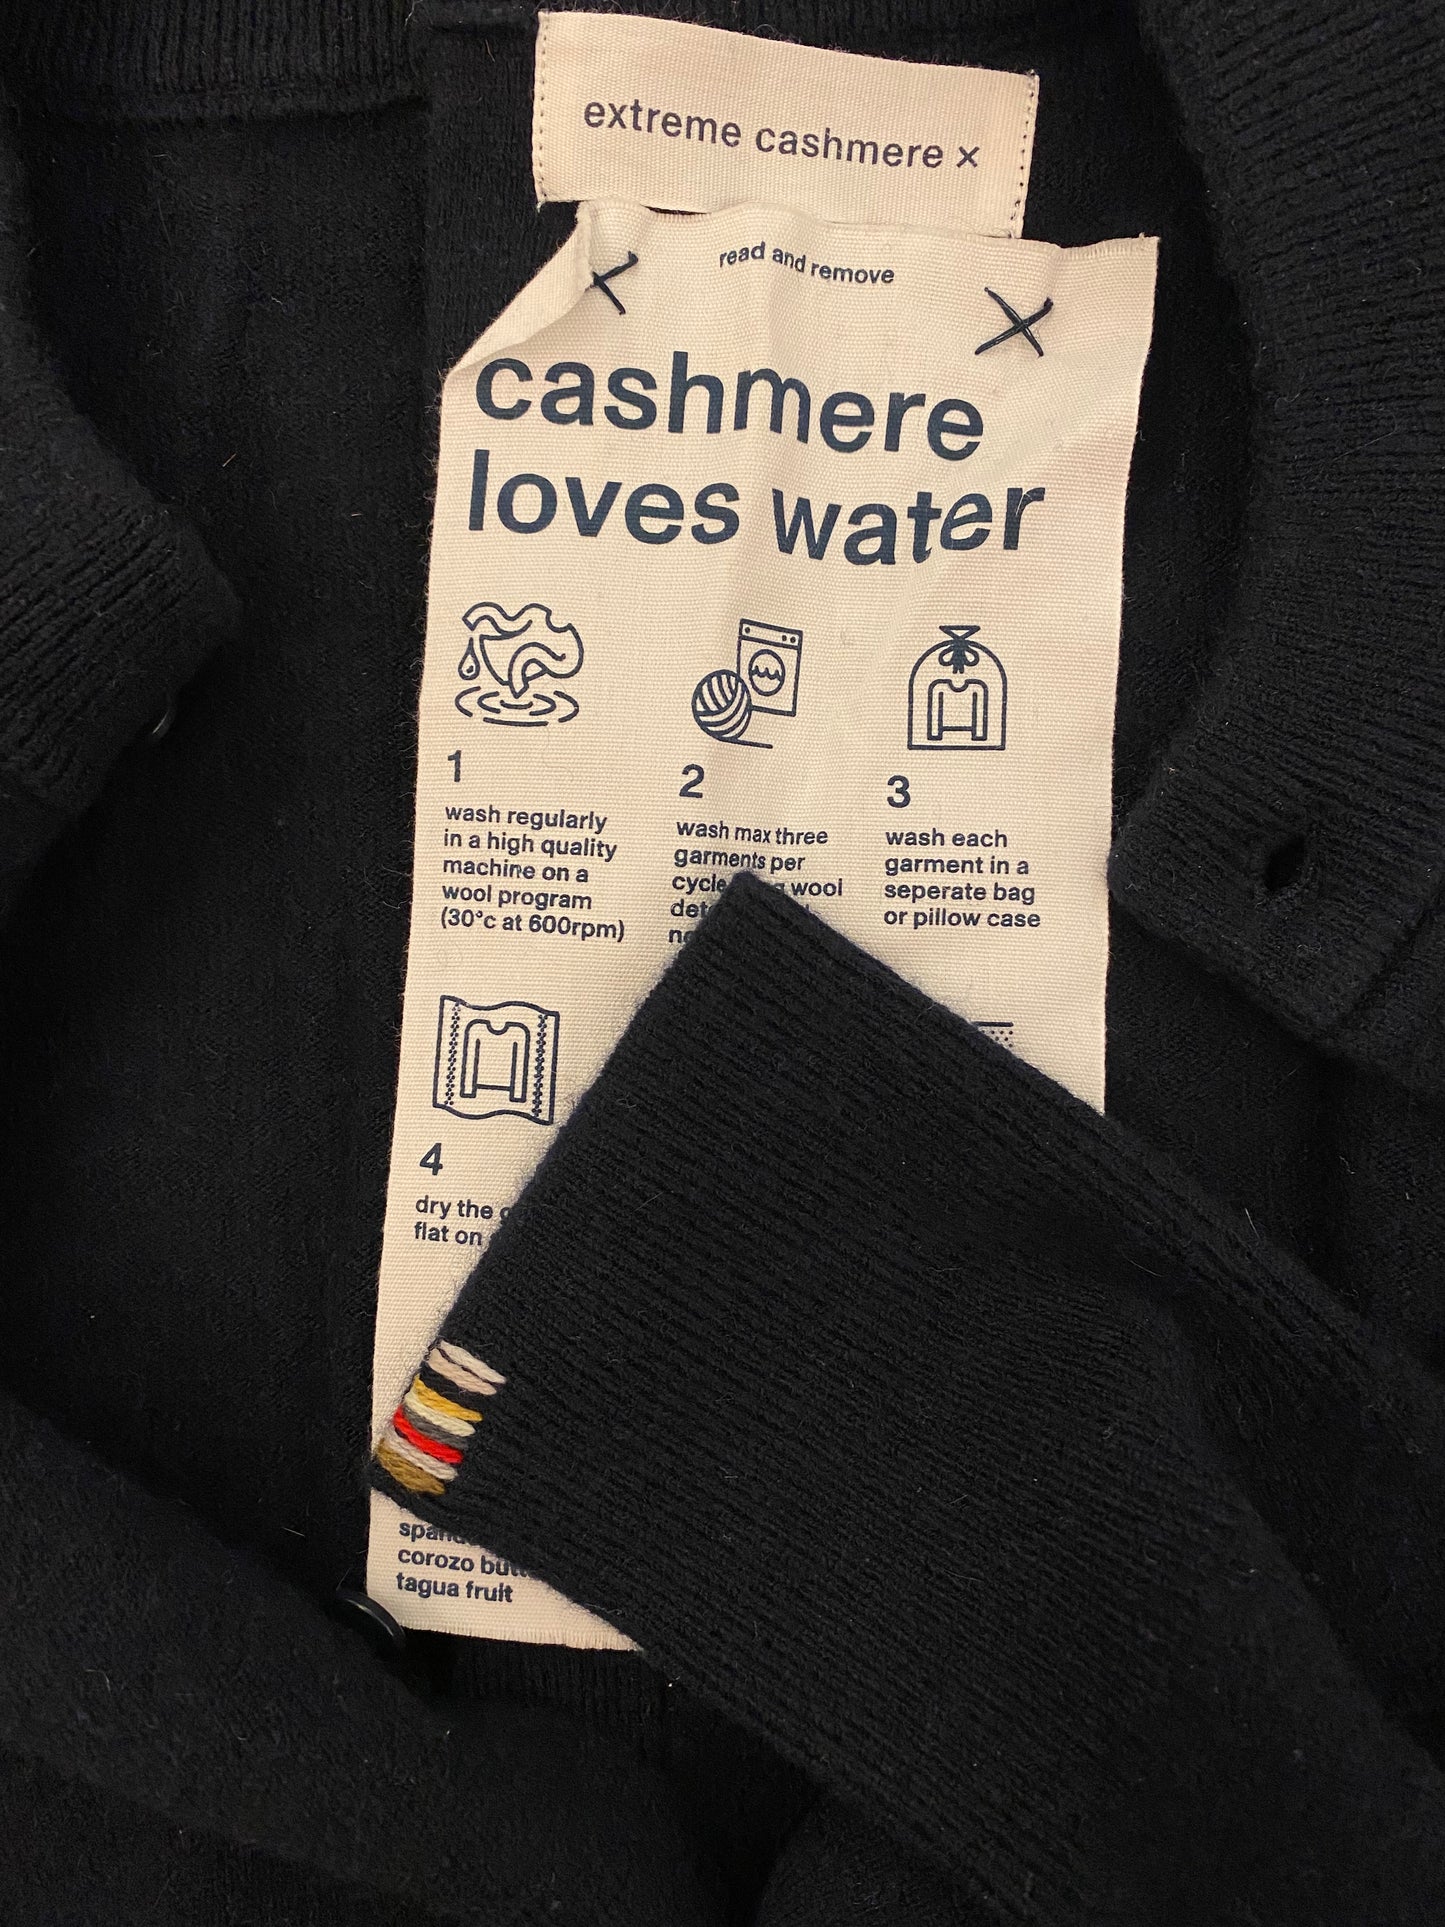 EXTREME CASHMERE x Cardigan One Size